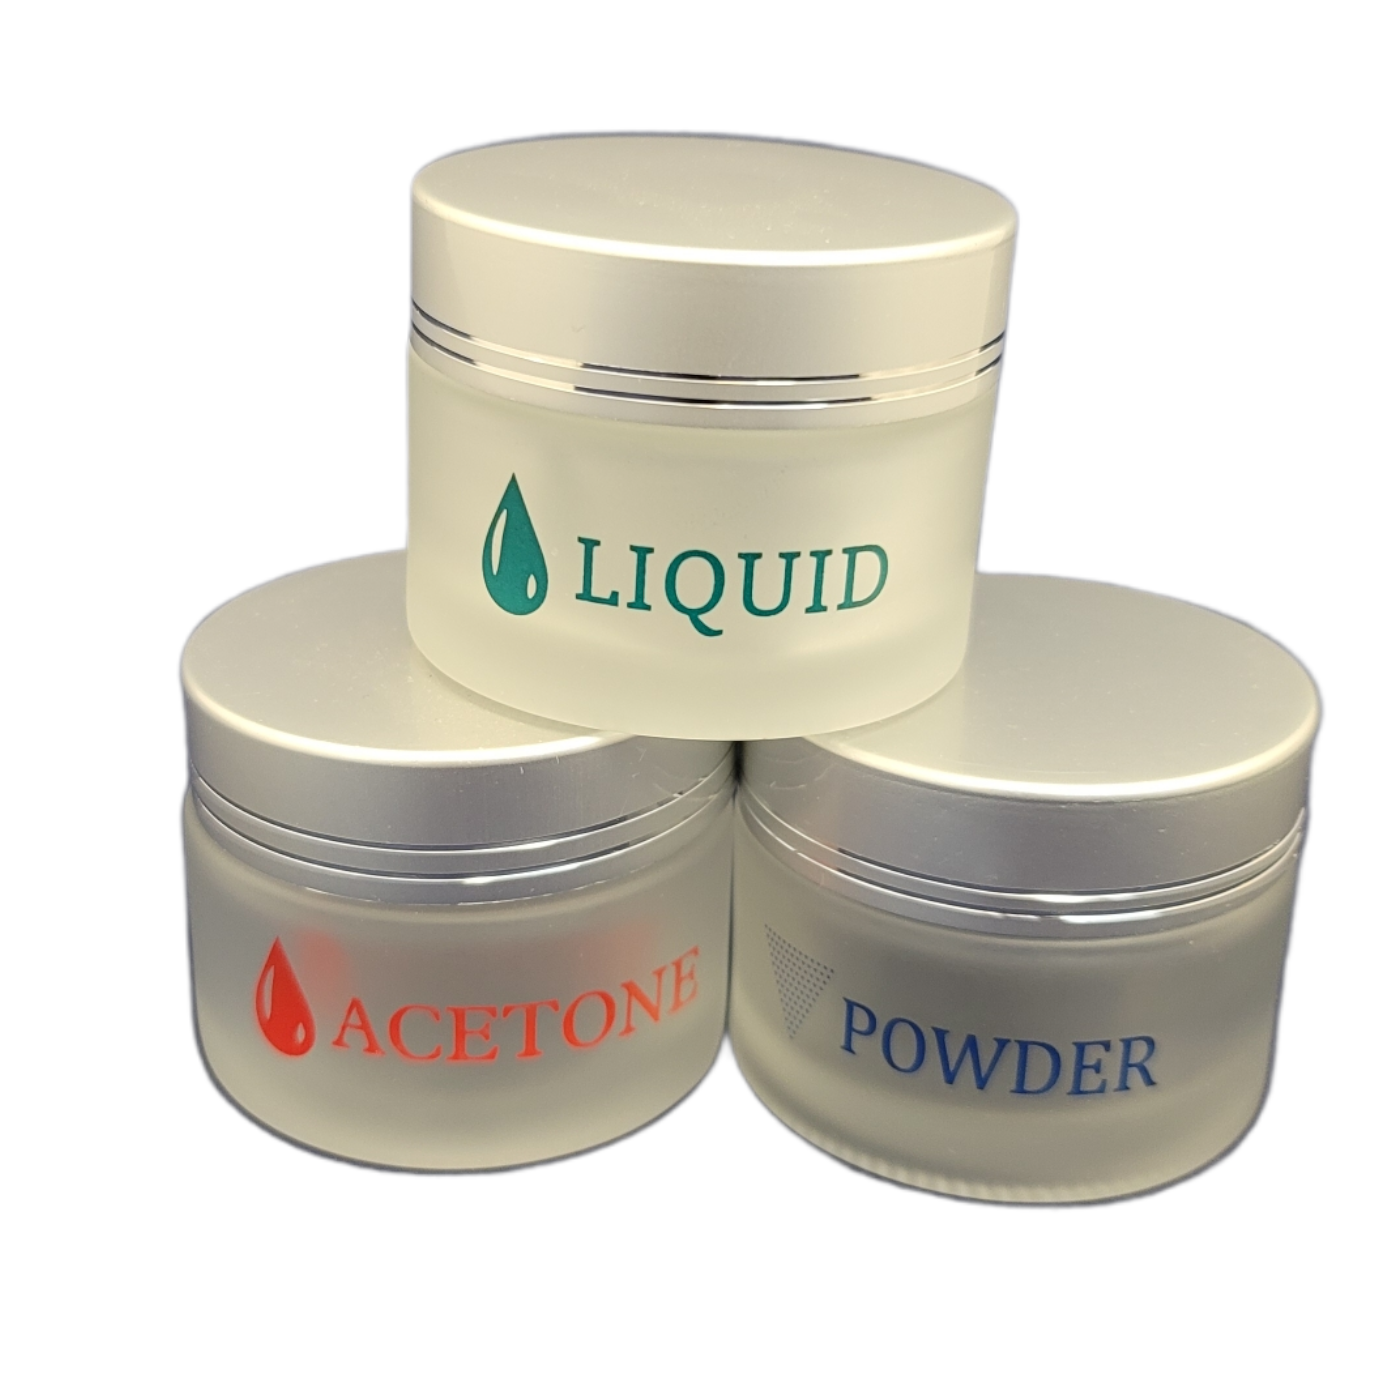 Set of Empty Frosted Glass Jar 2 oz - With Powder/Acetone/Liquid Label